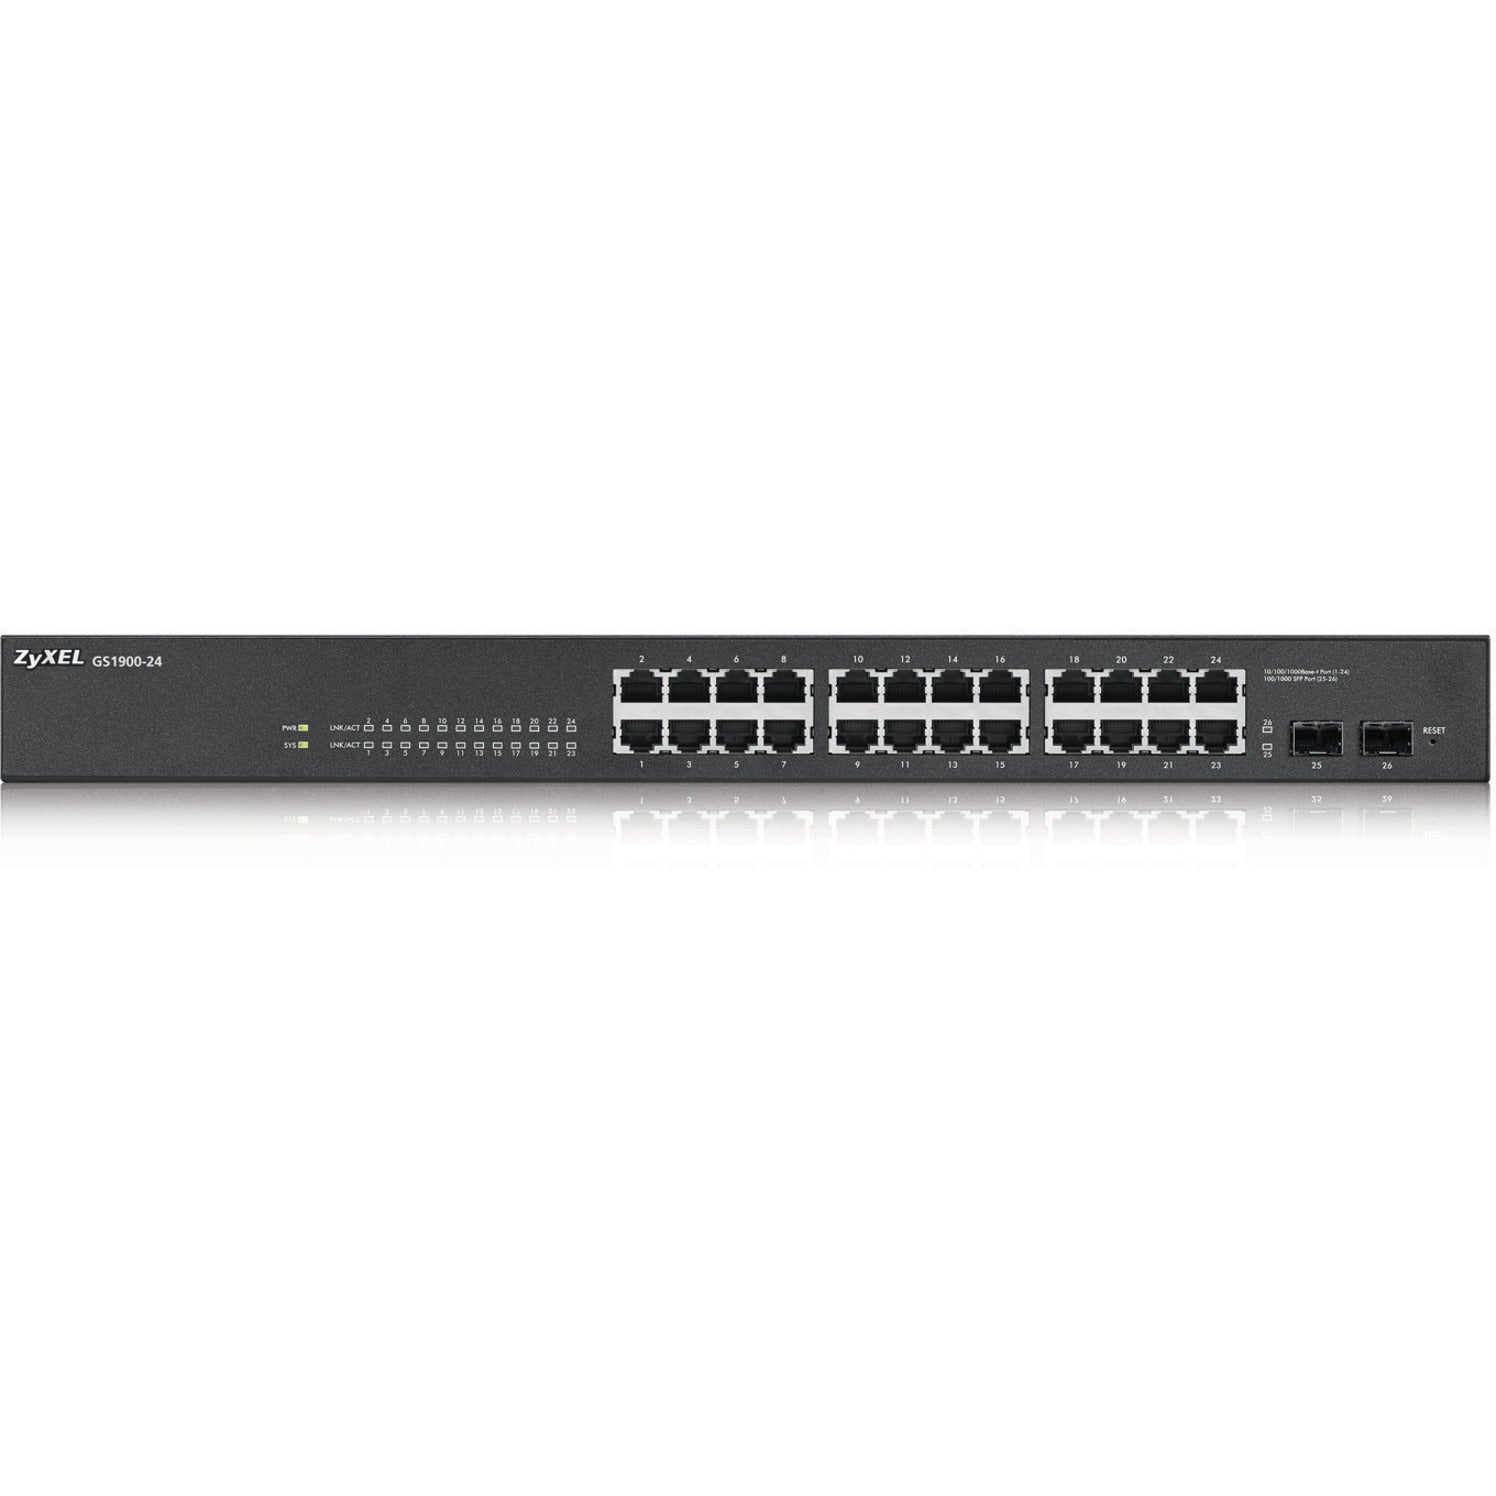 ZYXEL GS1900-24 Ethernet Switch, 24 Port Gigabit L2 Web Managed Rackmountable Switch